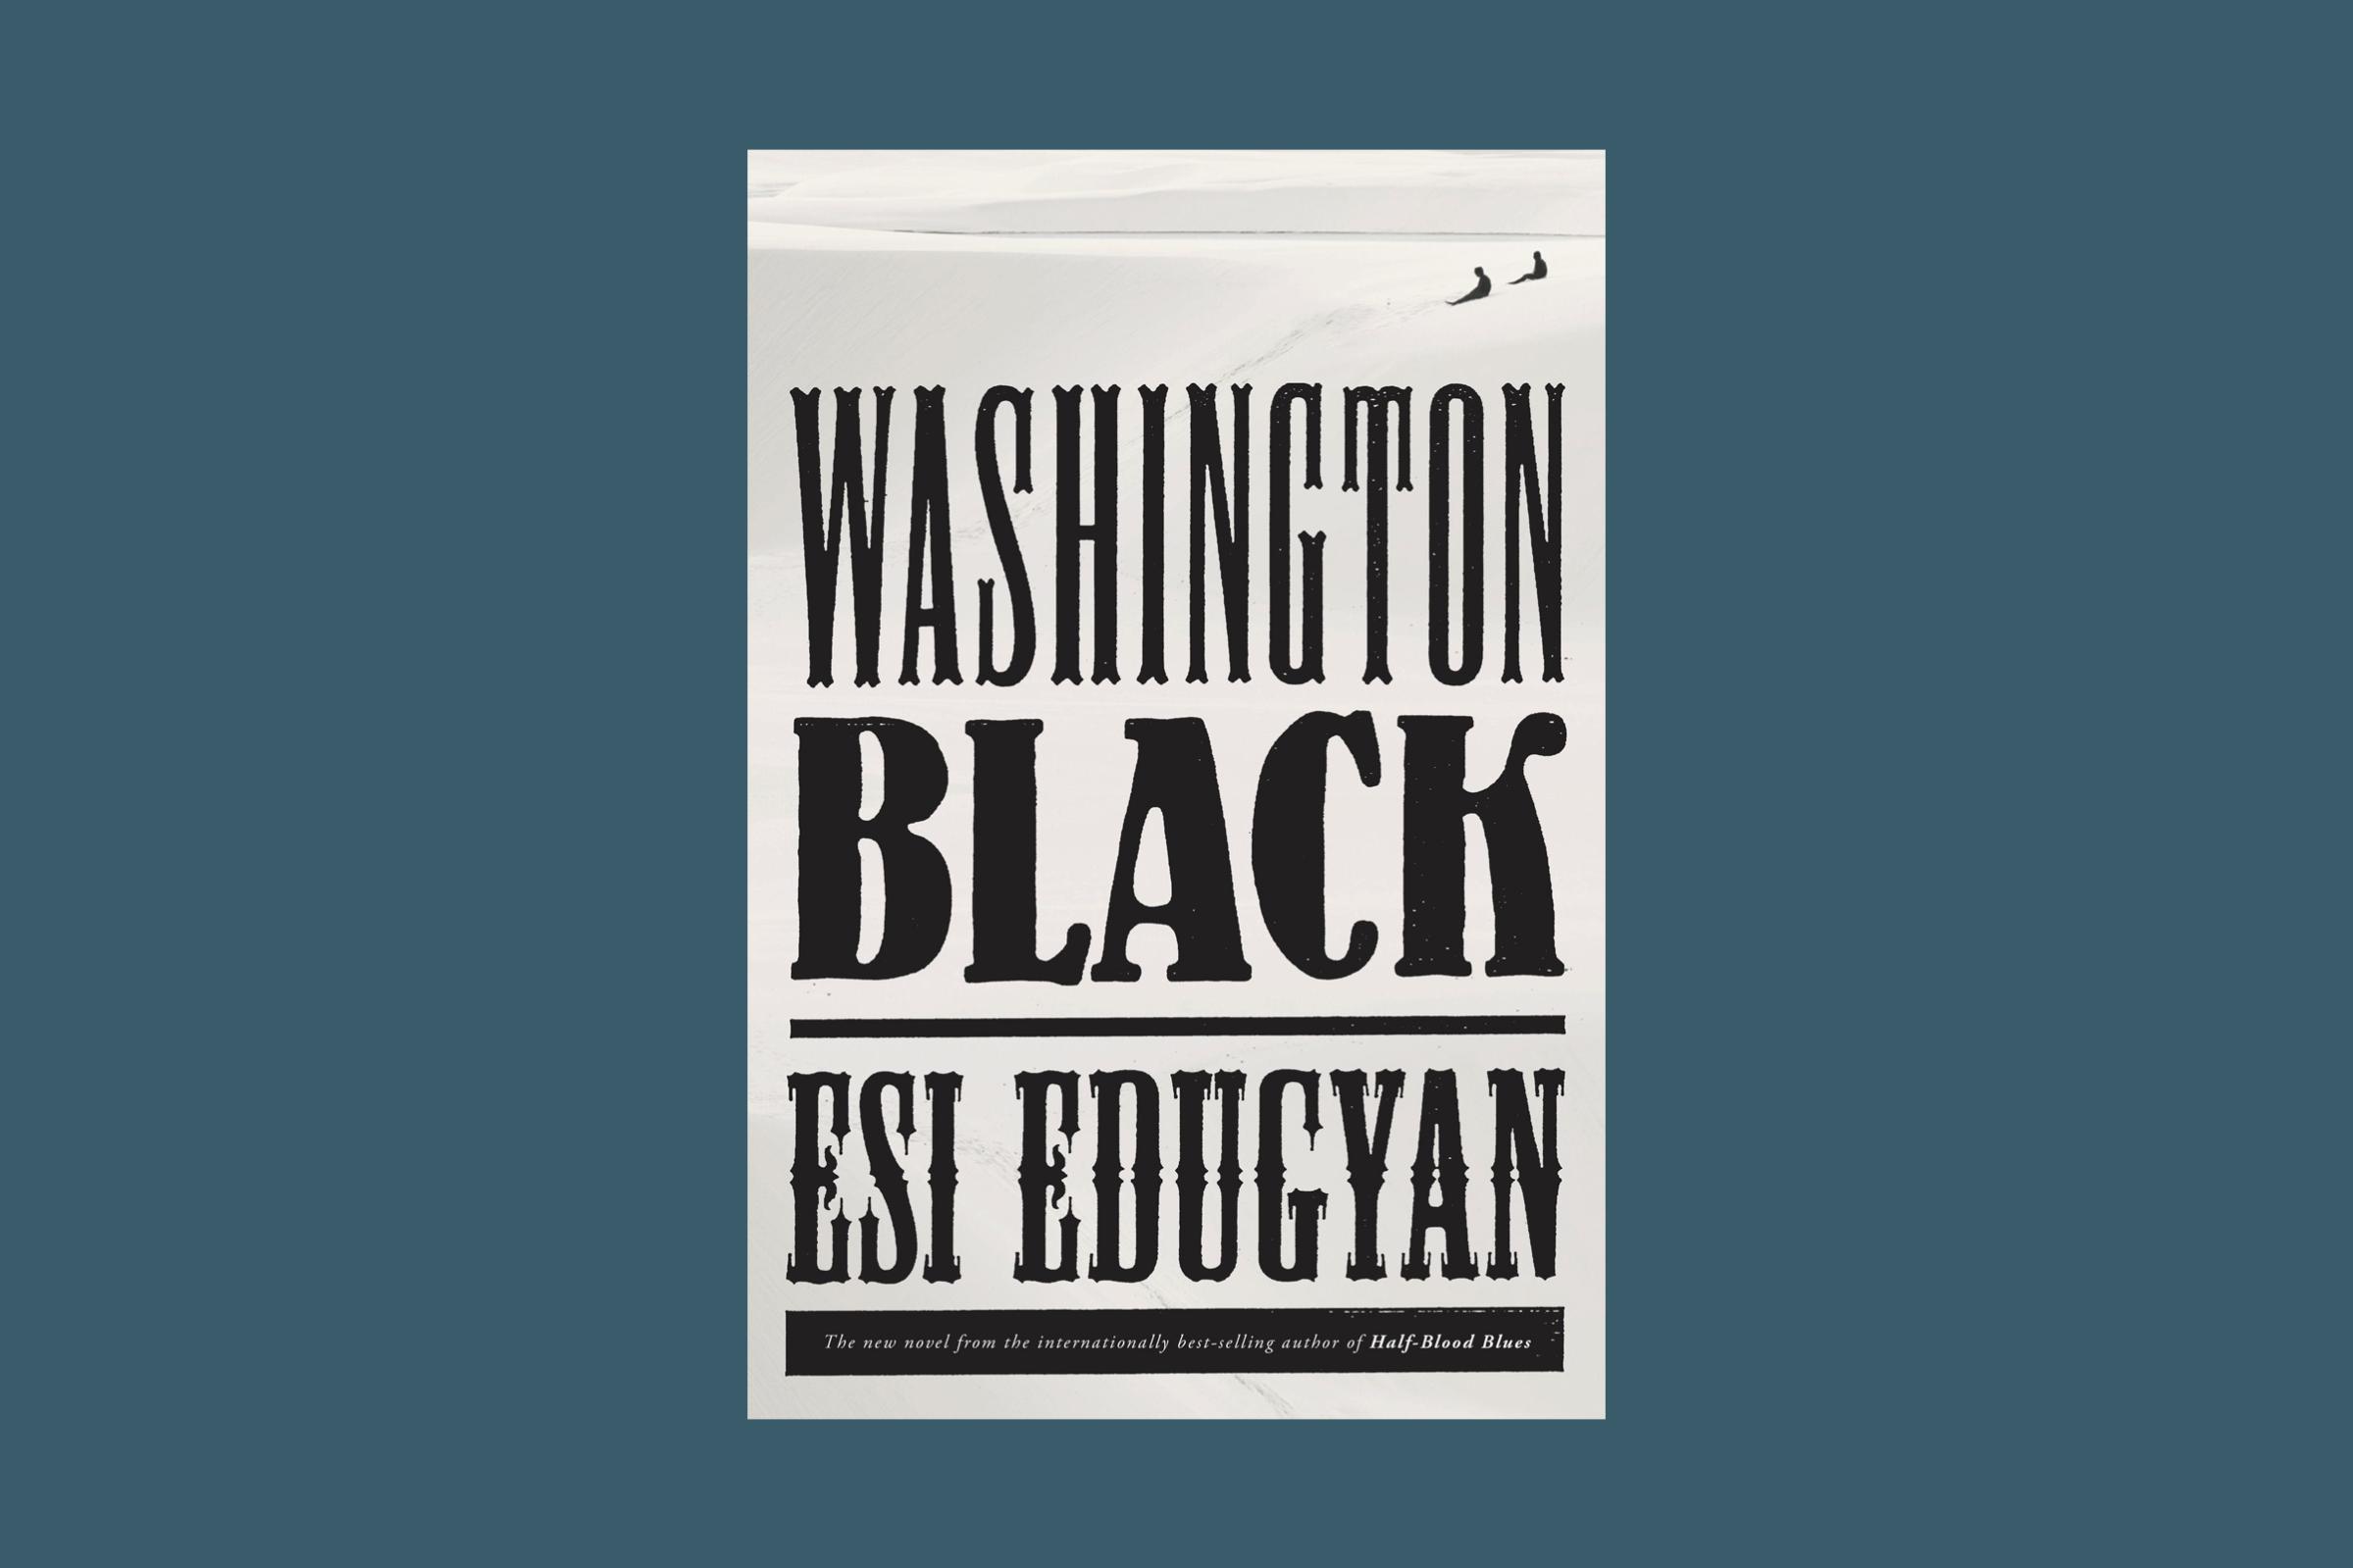 Washington Black, Esi Edugyan, Knopf